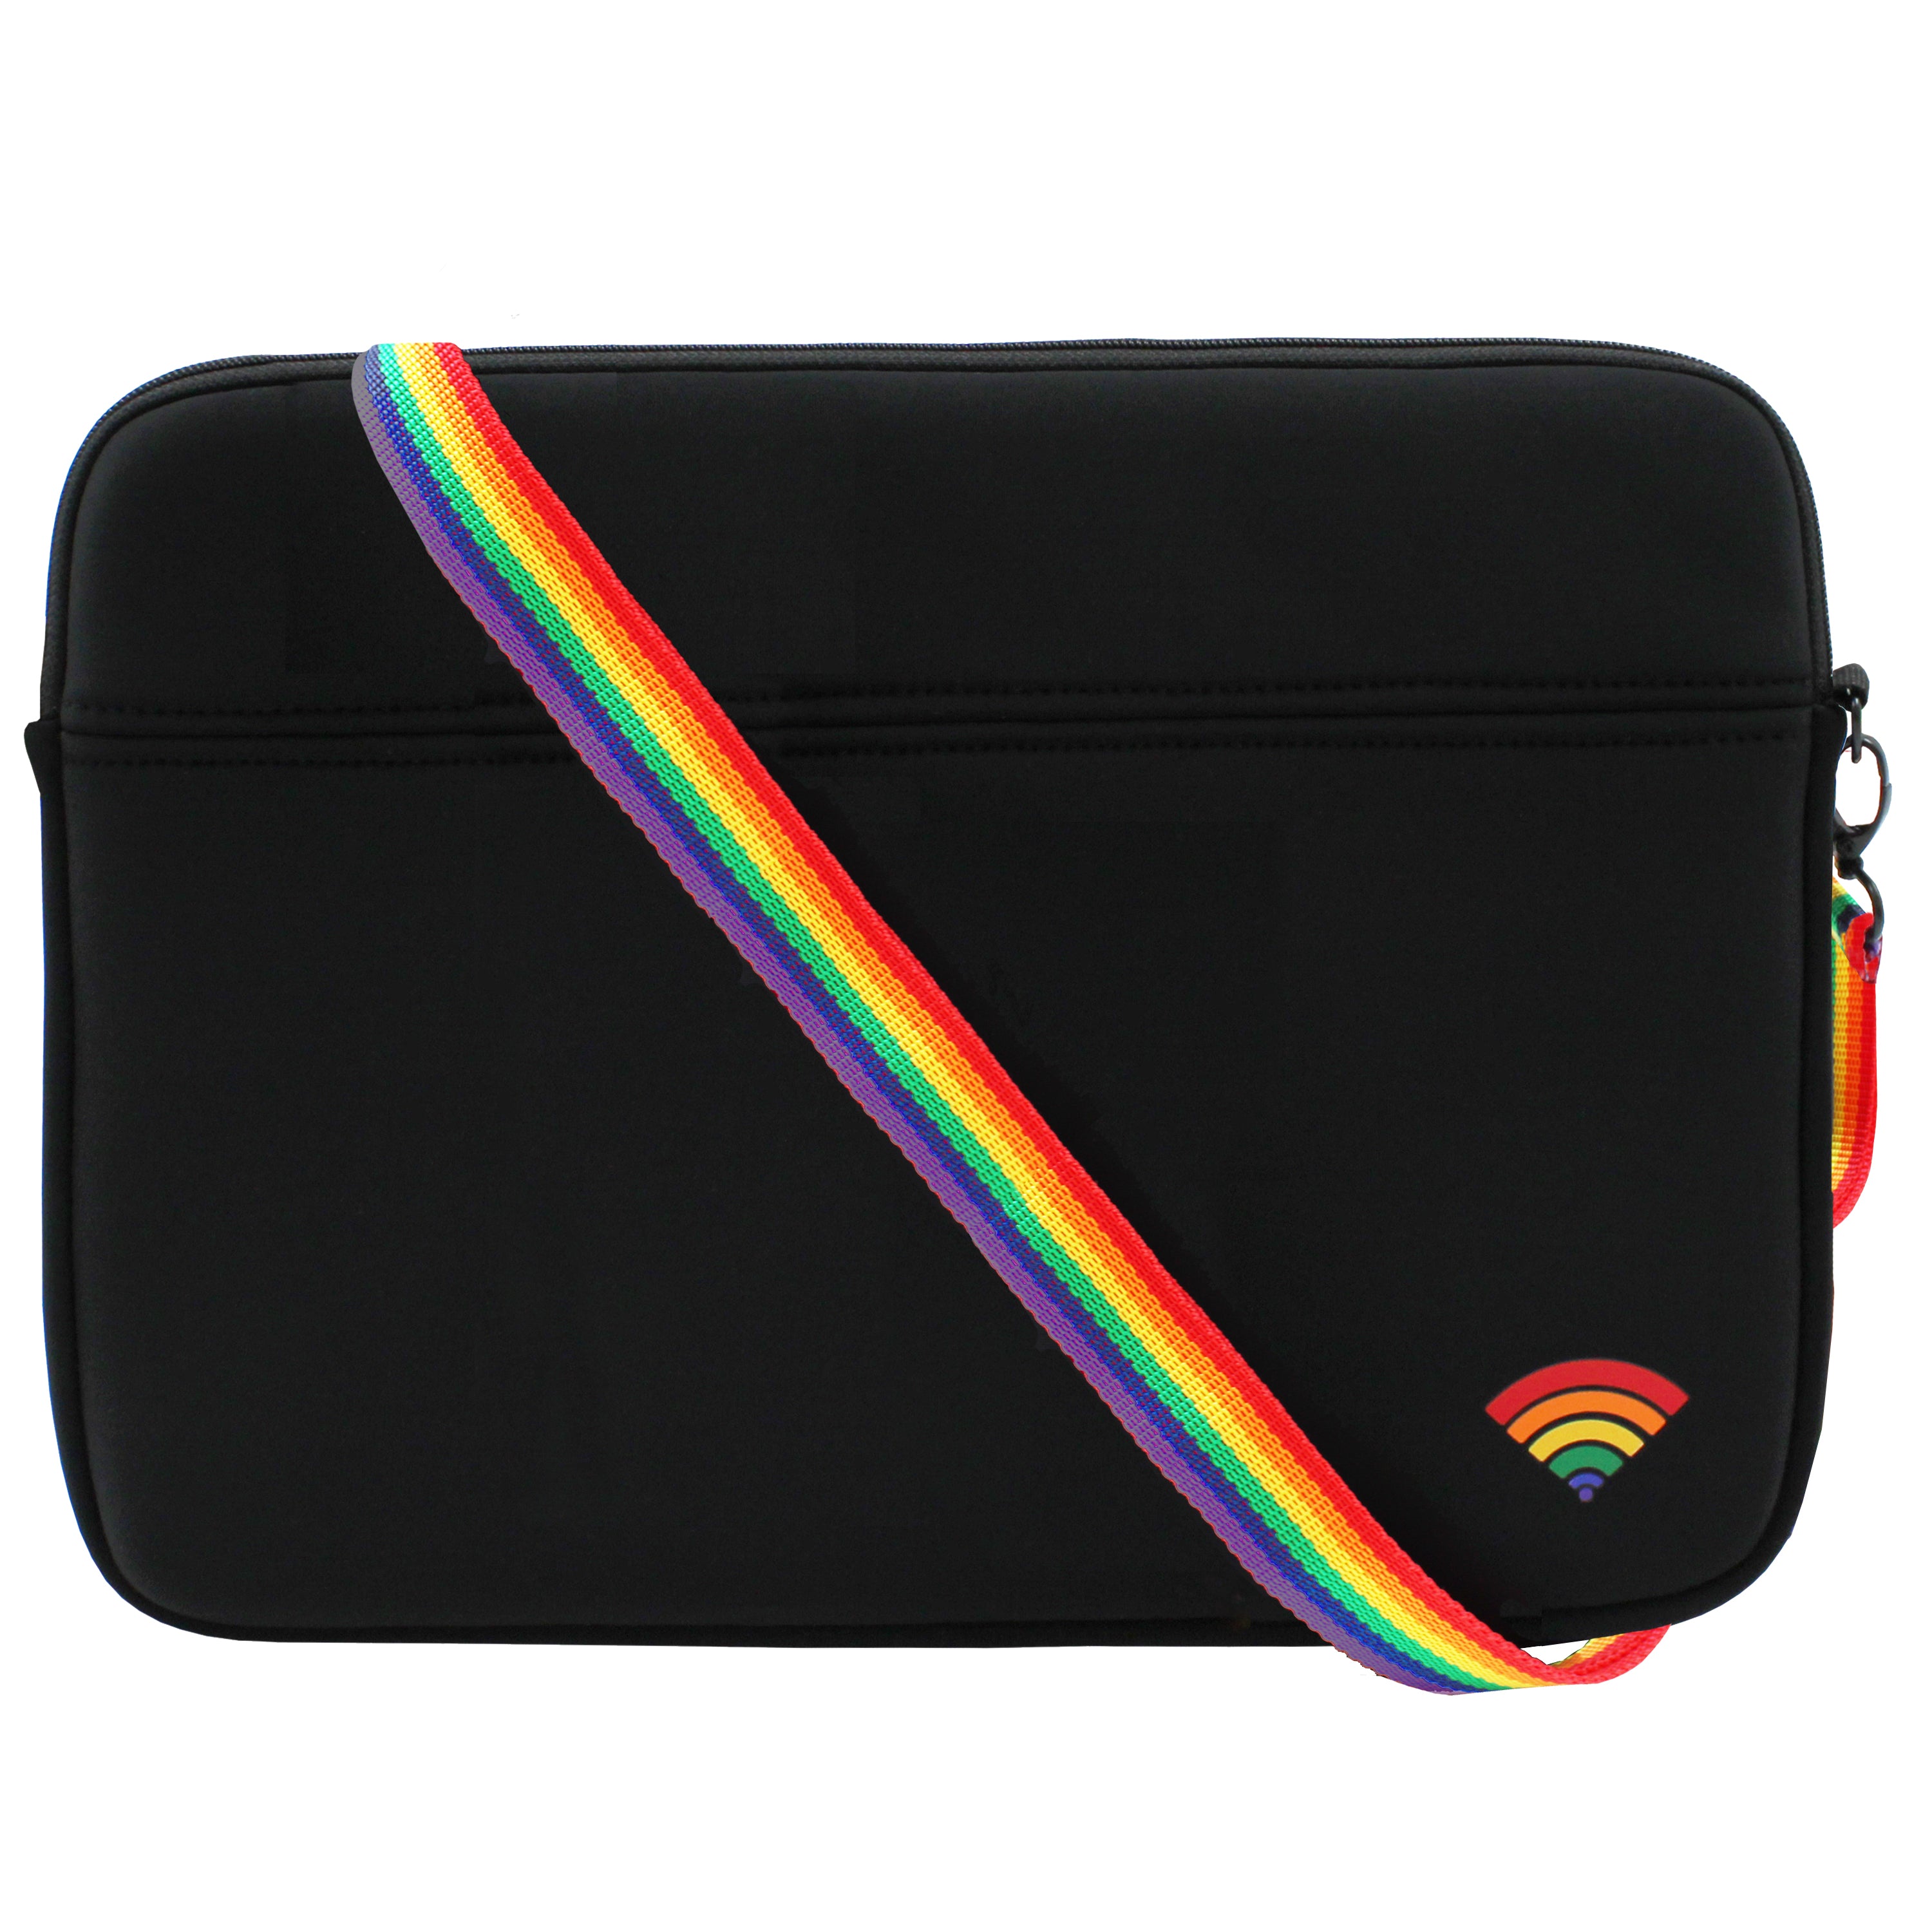 black neoprene laptop sleeve with rainbow colored strap